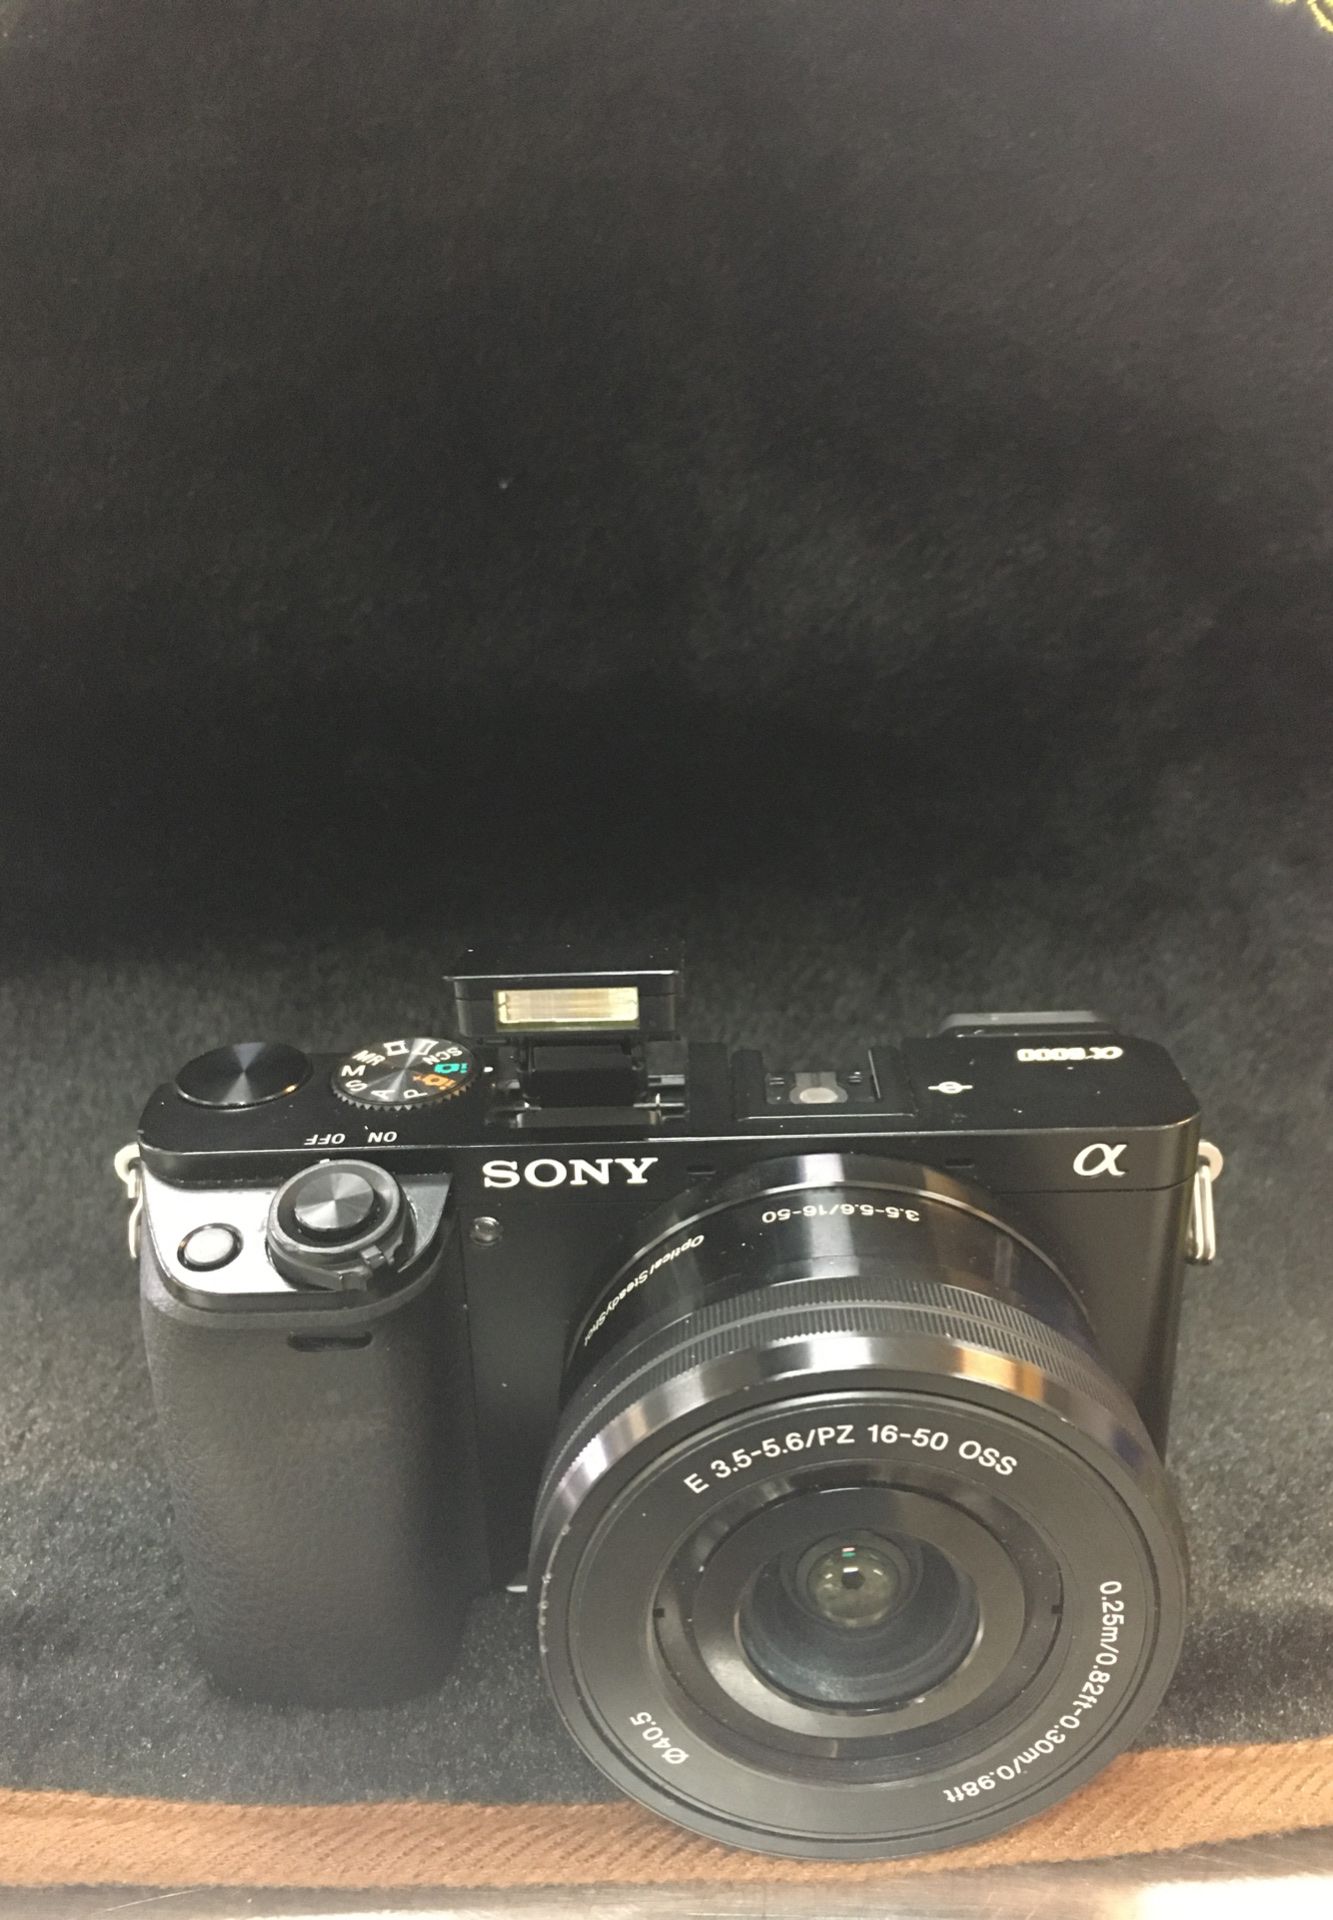 Sony ILCE 600 Digital Camera